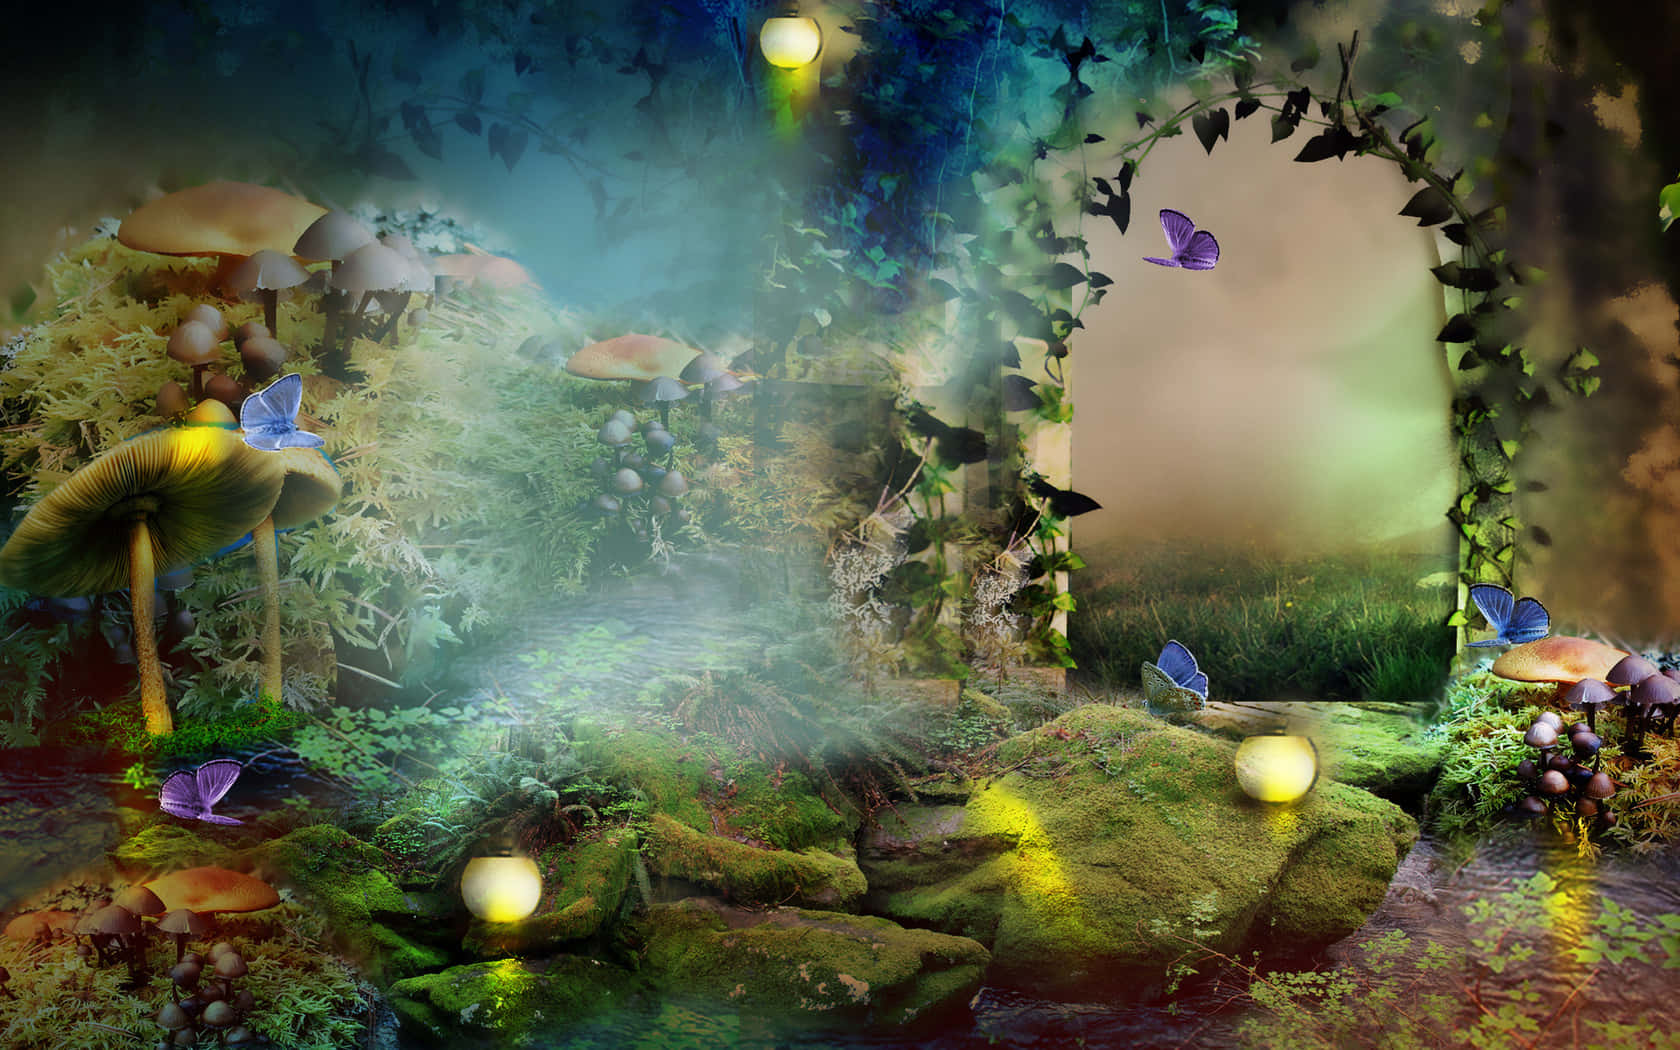 Enchanted Garden - A Magical Forest Oasis Wallpaper